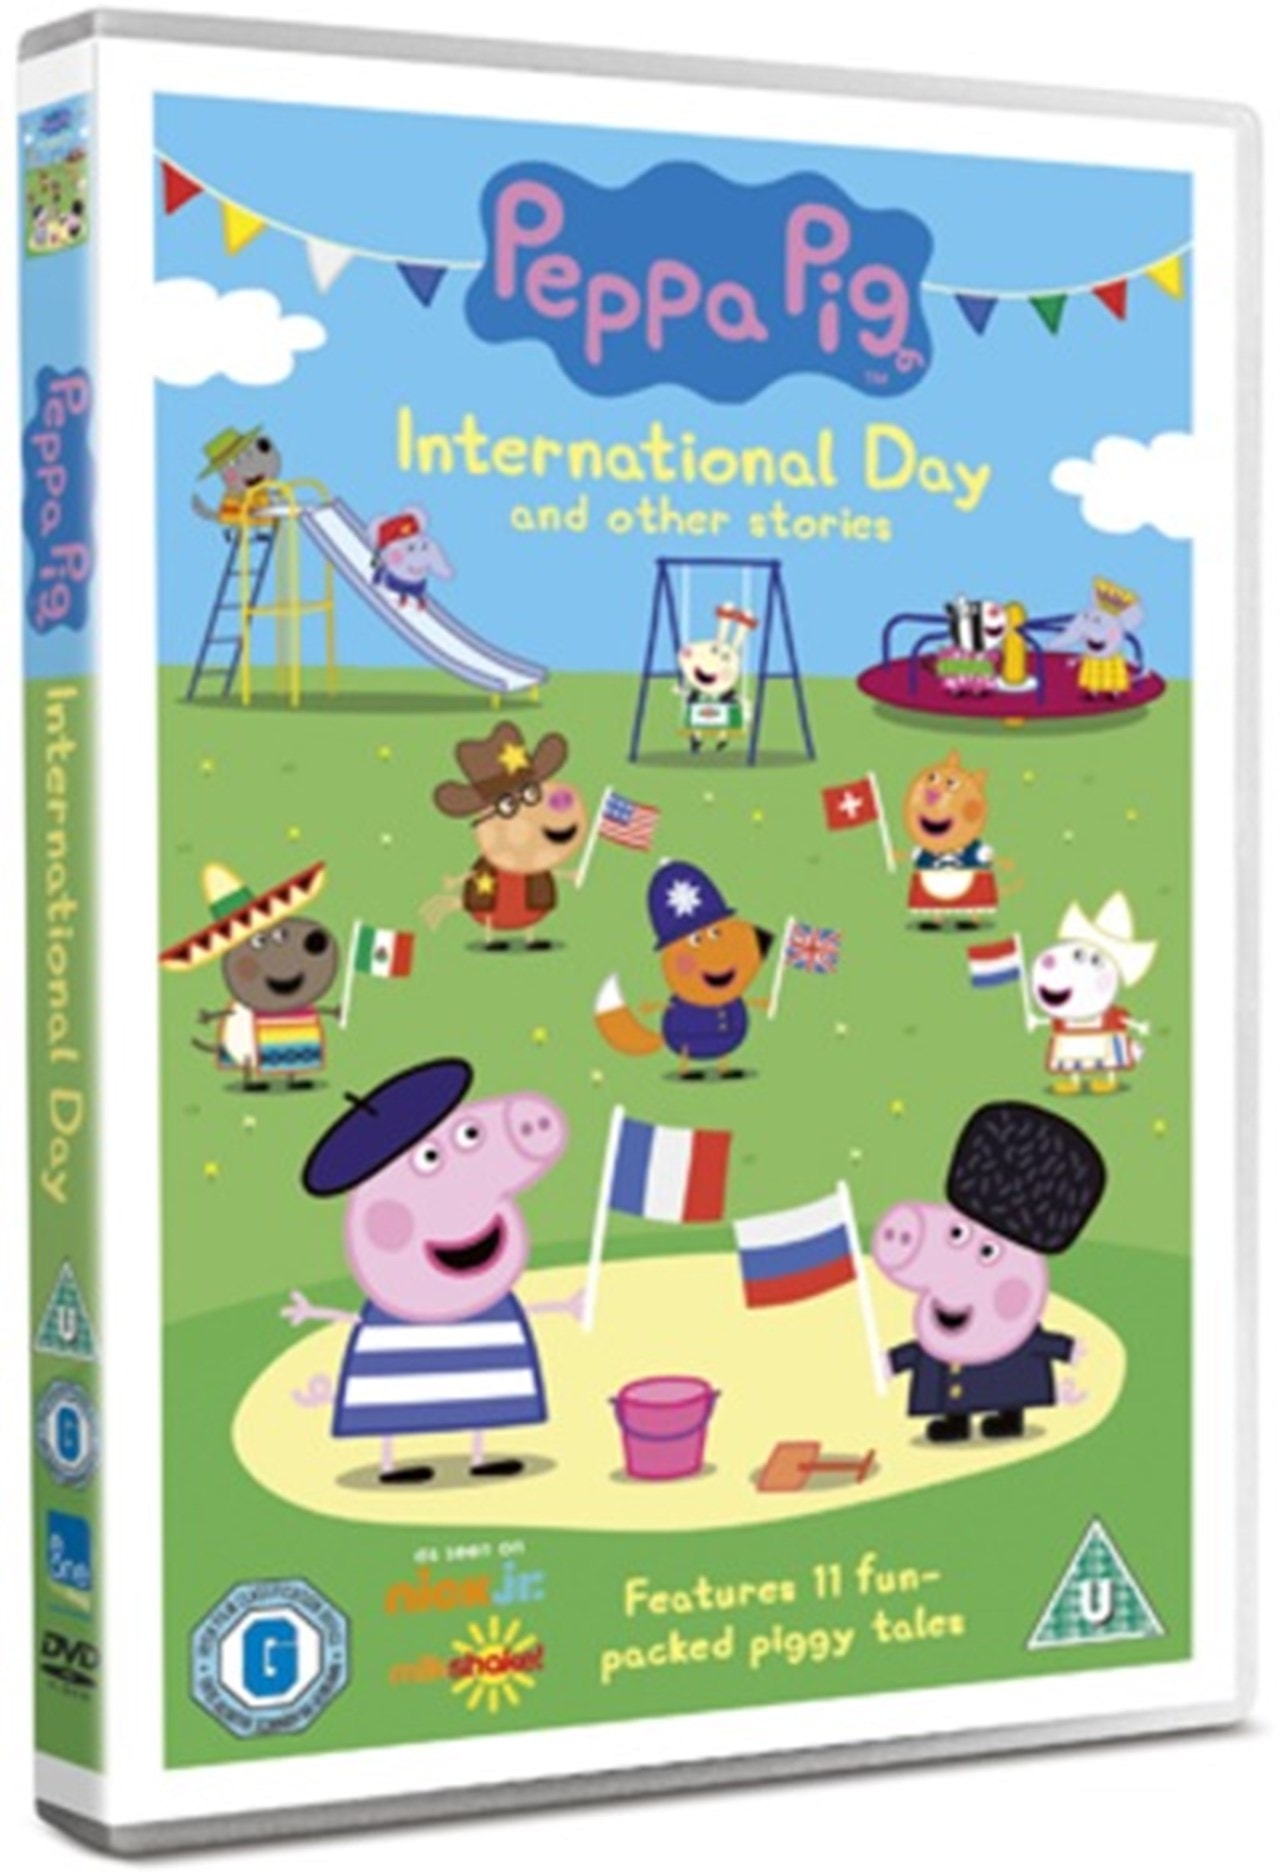 Peppa Pig International Day Dvd Free Shipping Over £20 Hmv Store